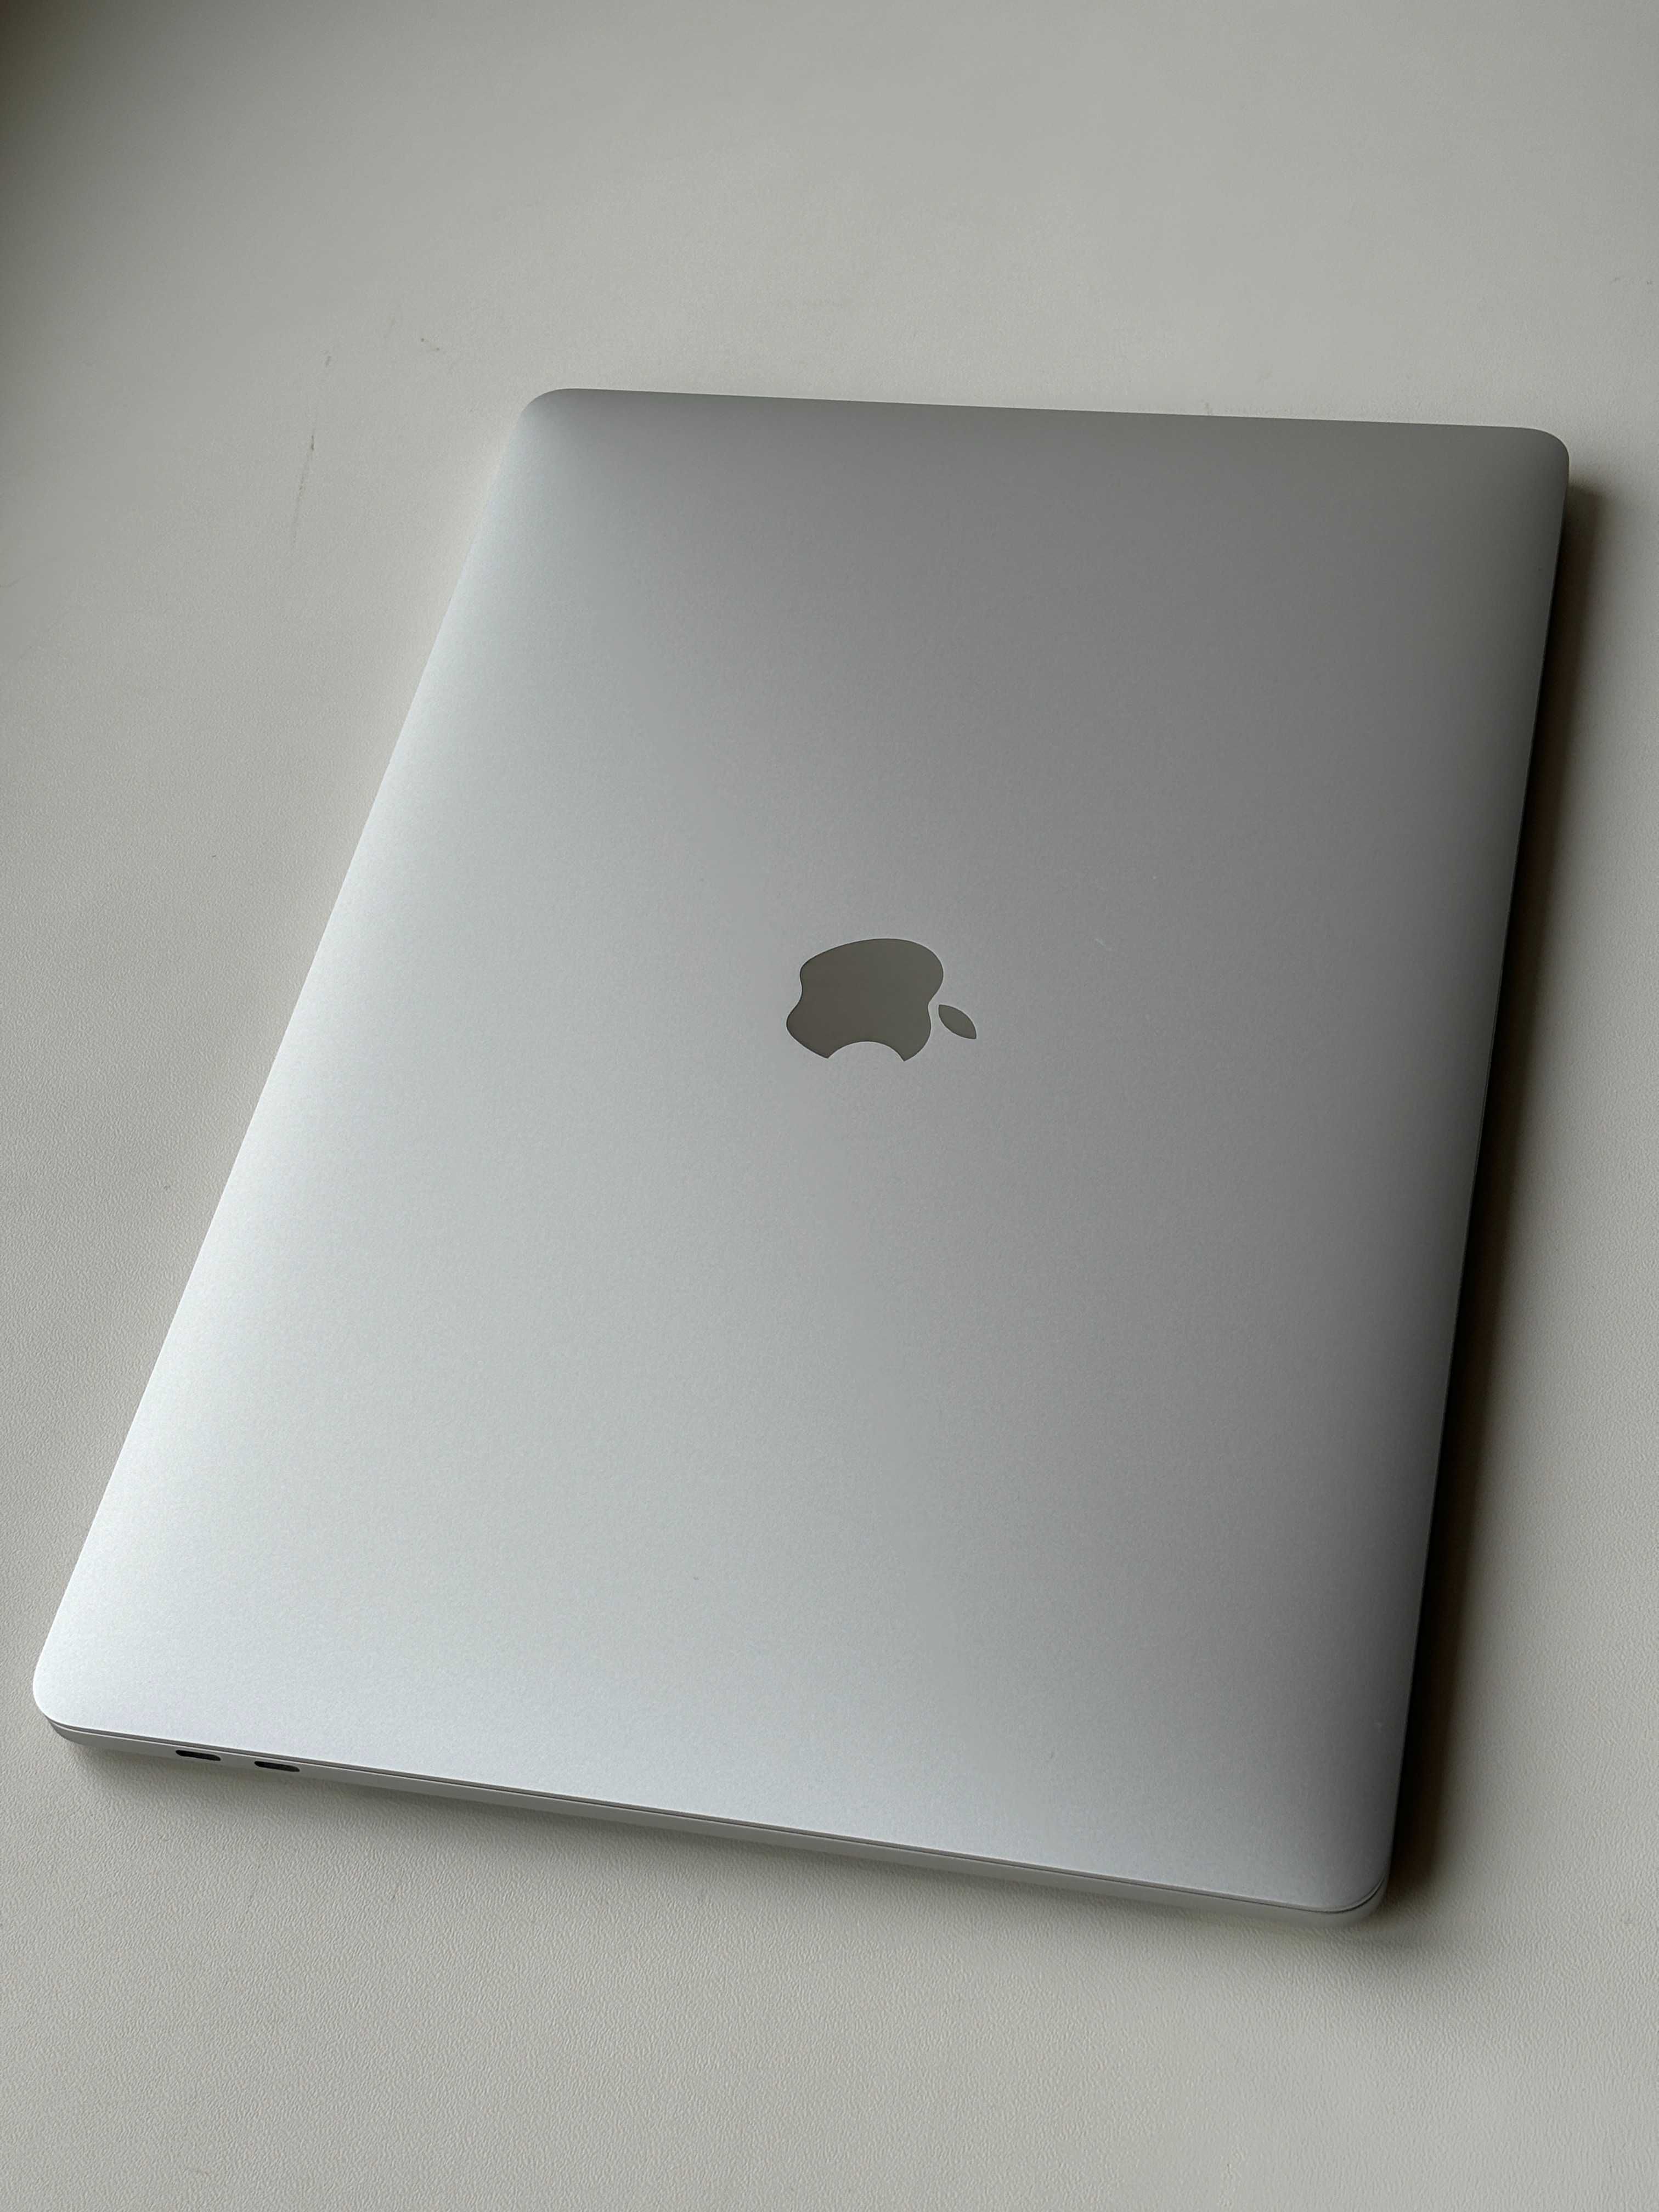 MacBook Pro 15" 2017 (i7 2,8GHz/16/512/Radeon Pro 555) Корпус як новий